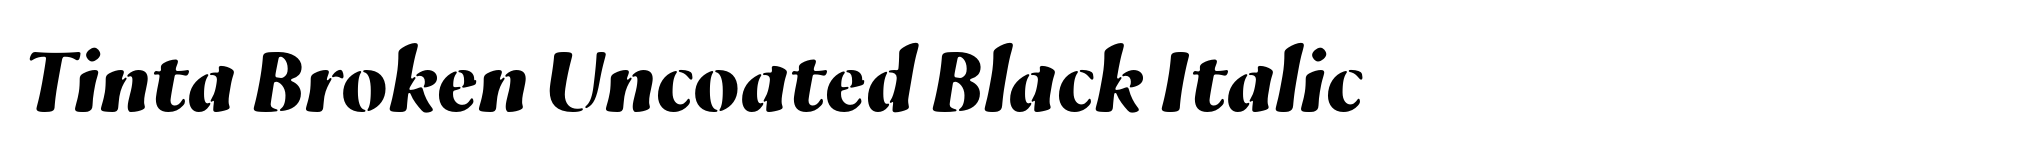 Tinta Broken Uncoated Black Italic image